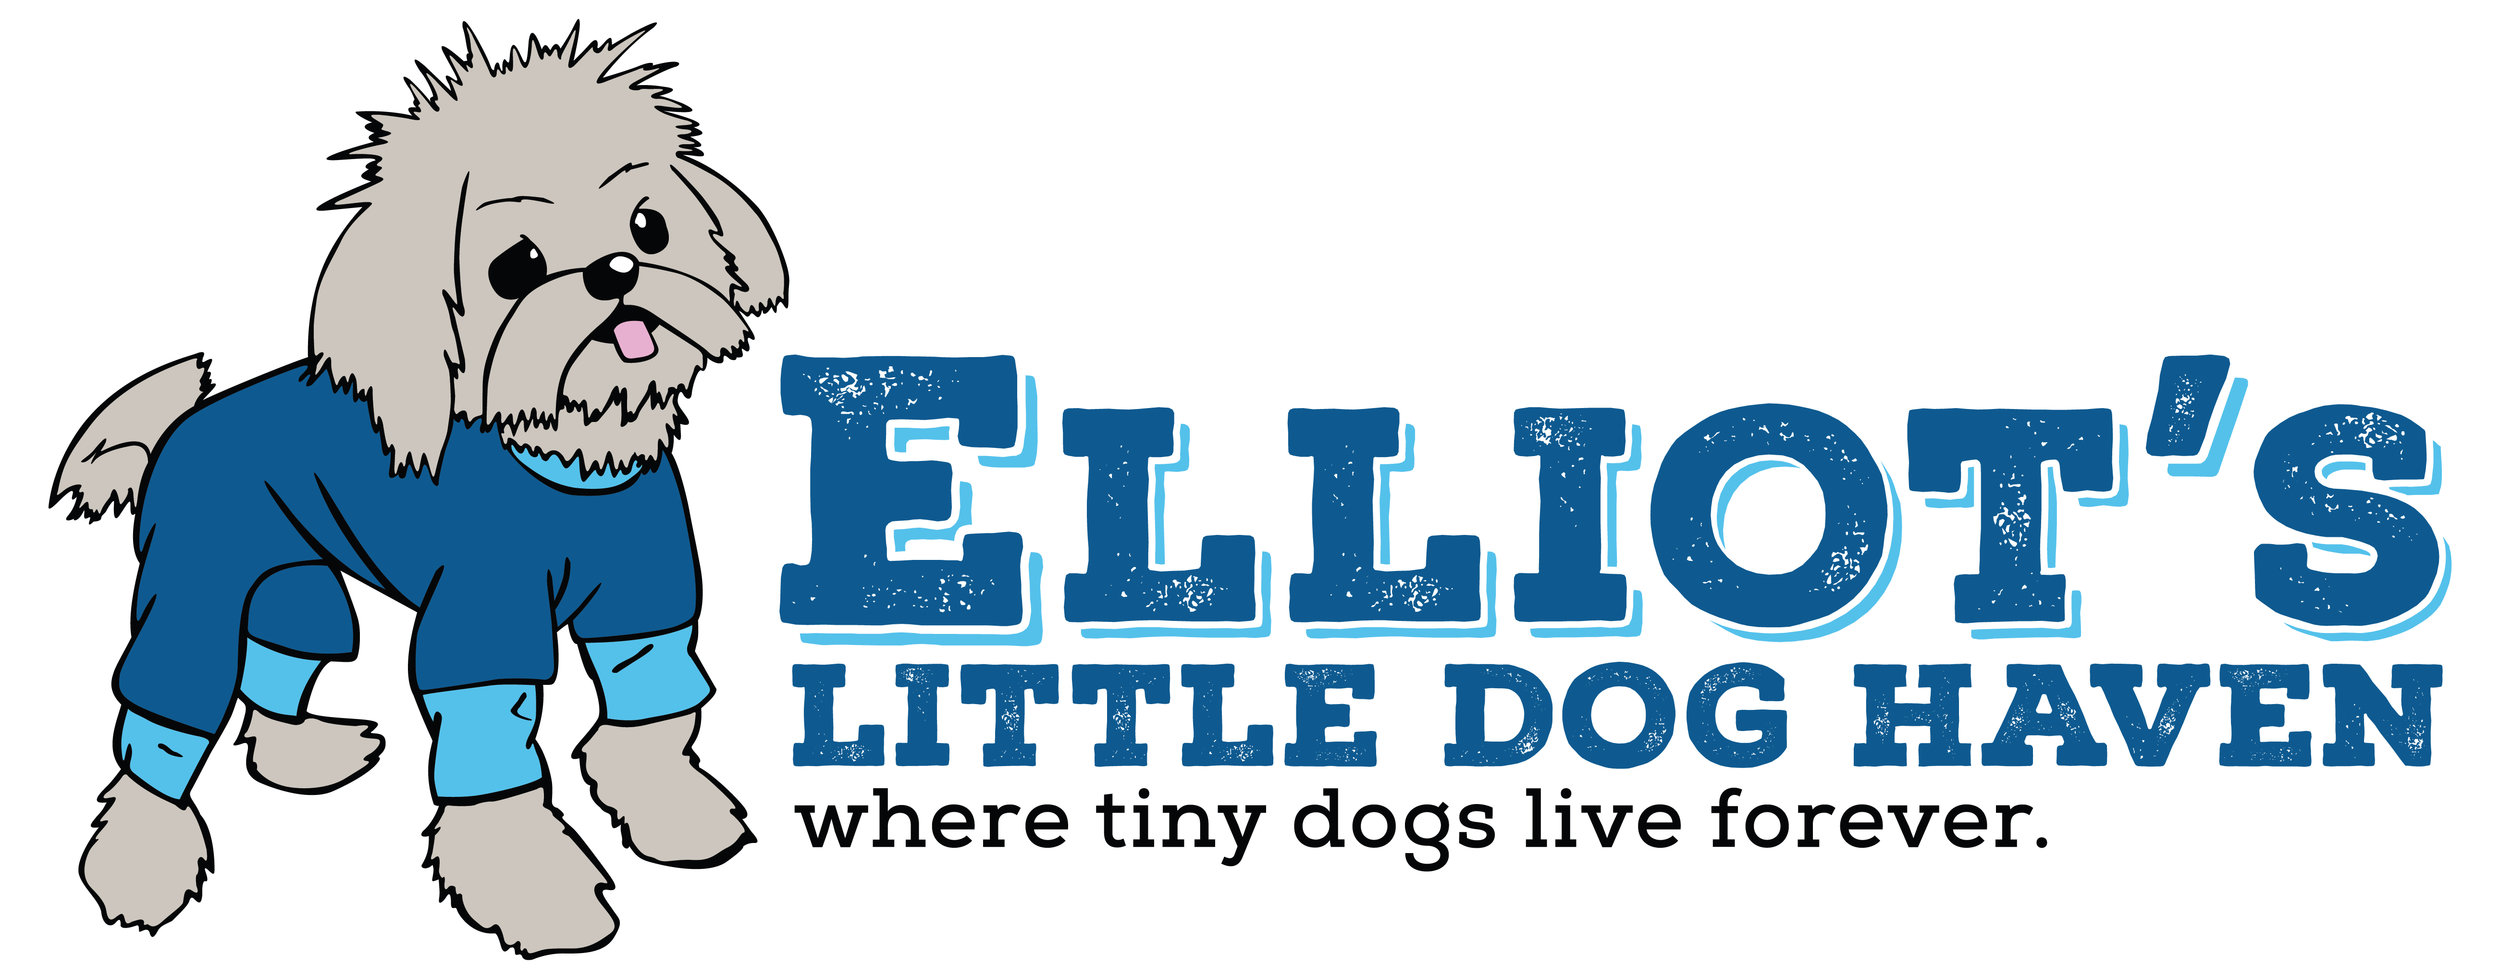 elliots_little_dog_haven_logo-01.jpg